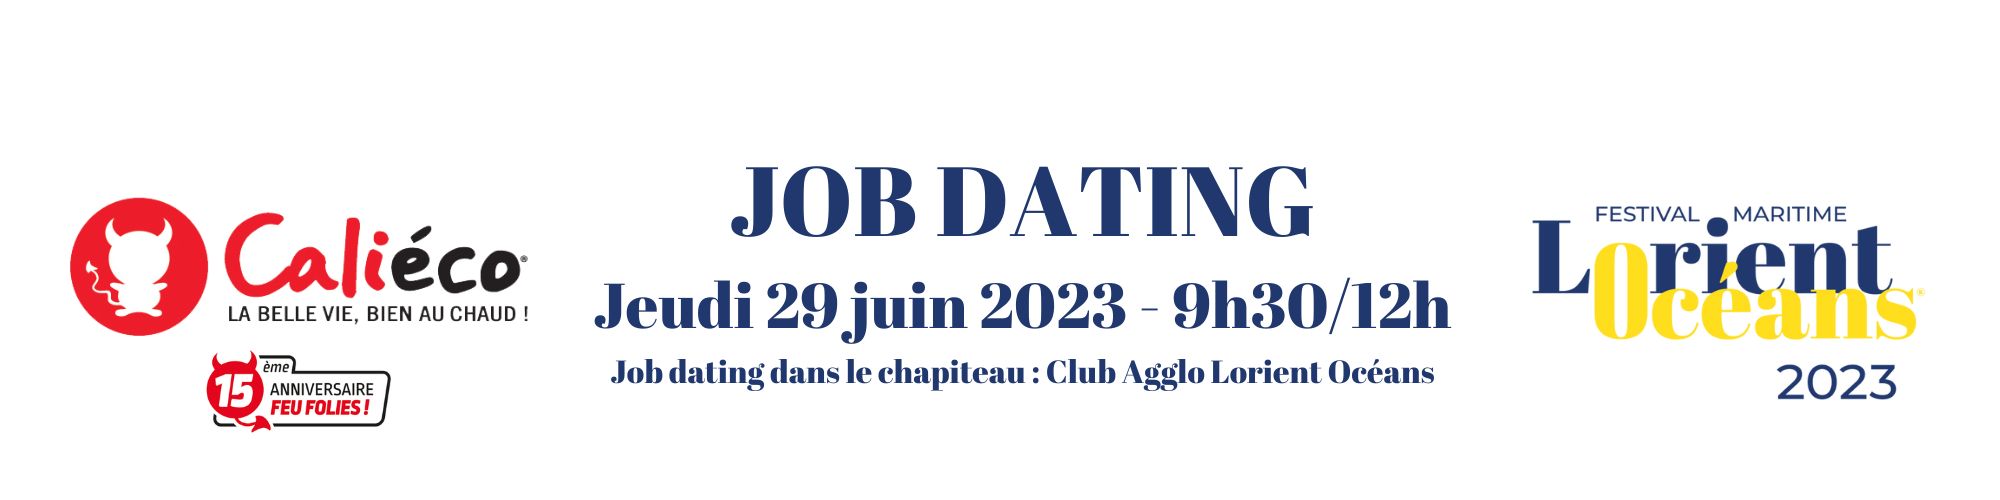 bandeau-job-dating-juin-2023.jpg